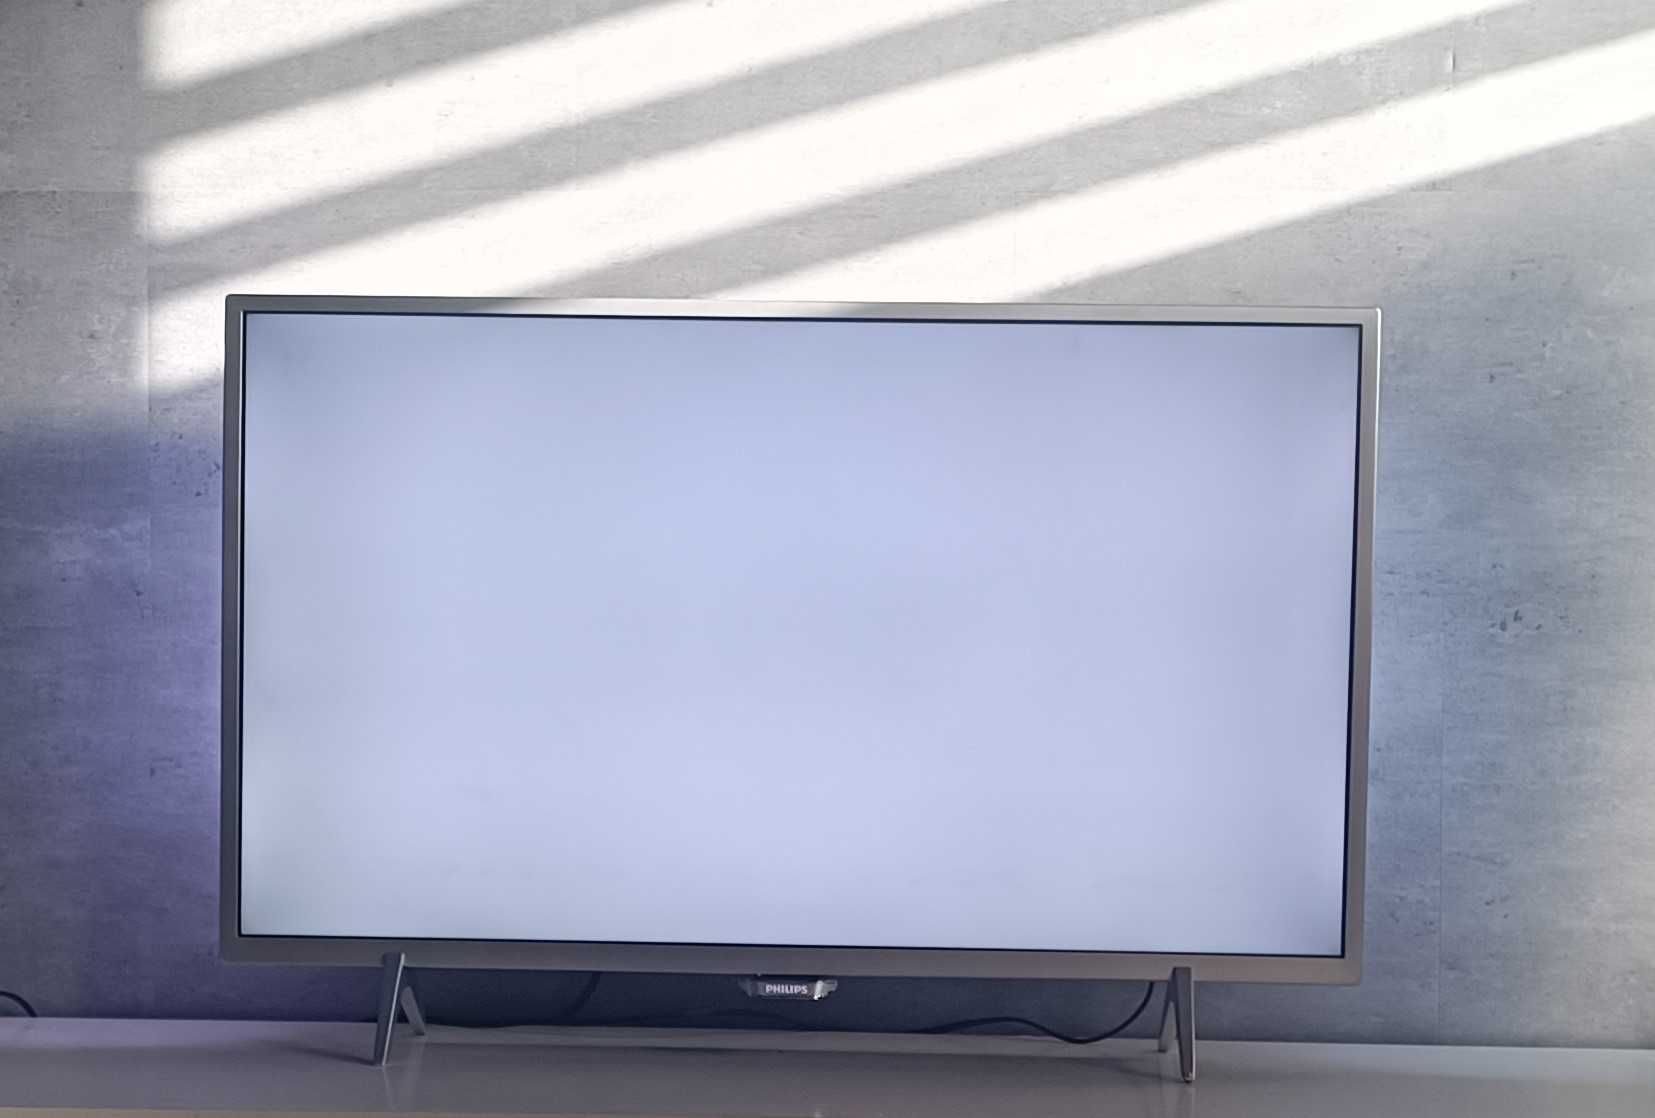 32 Cali Philips LED FULL HD Ambilight ANDROID TV DVB-T2  + Kupon ++